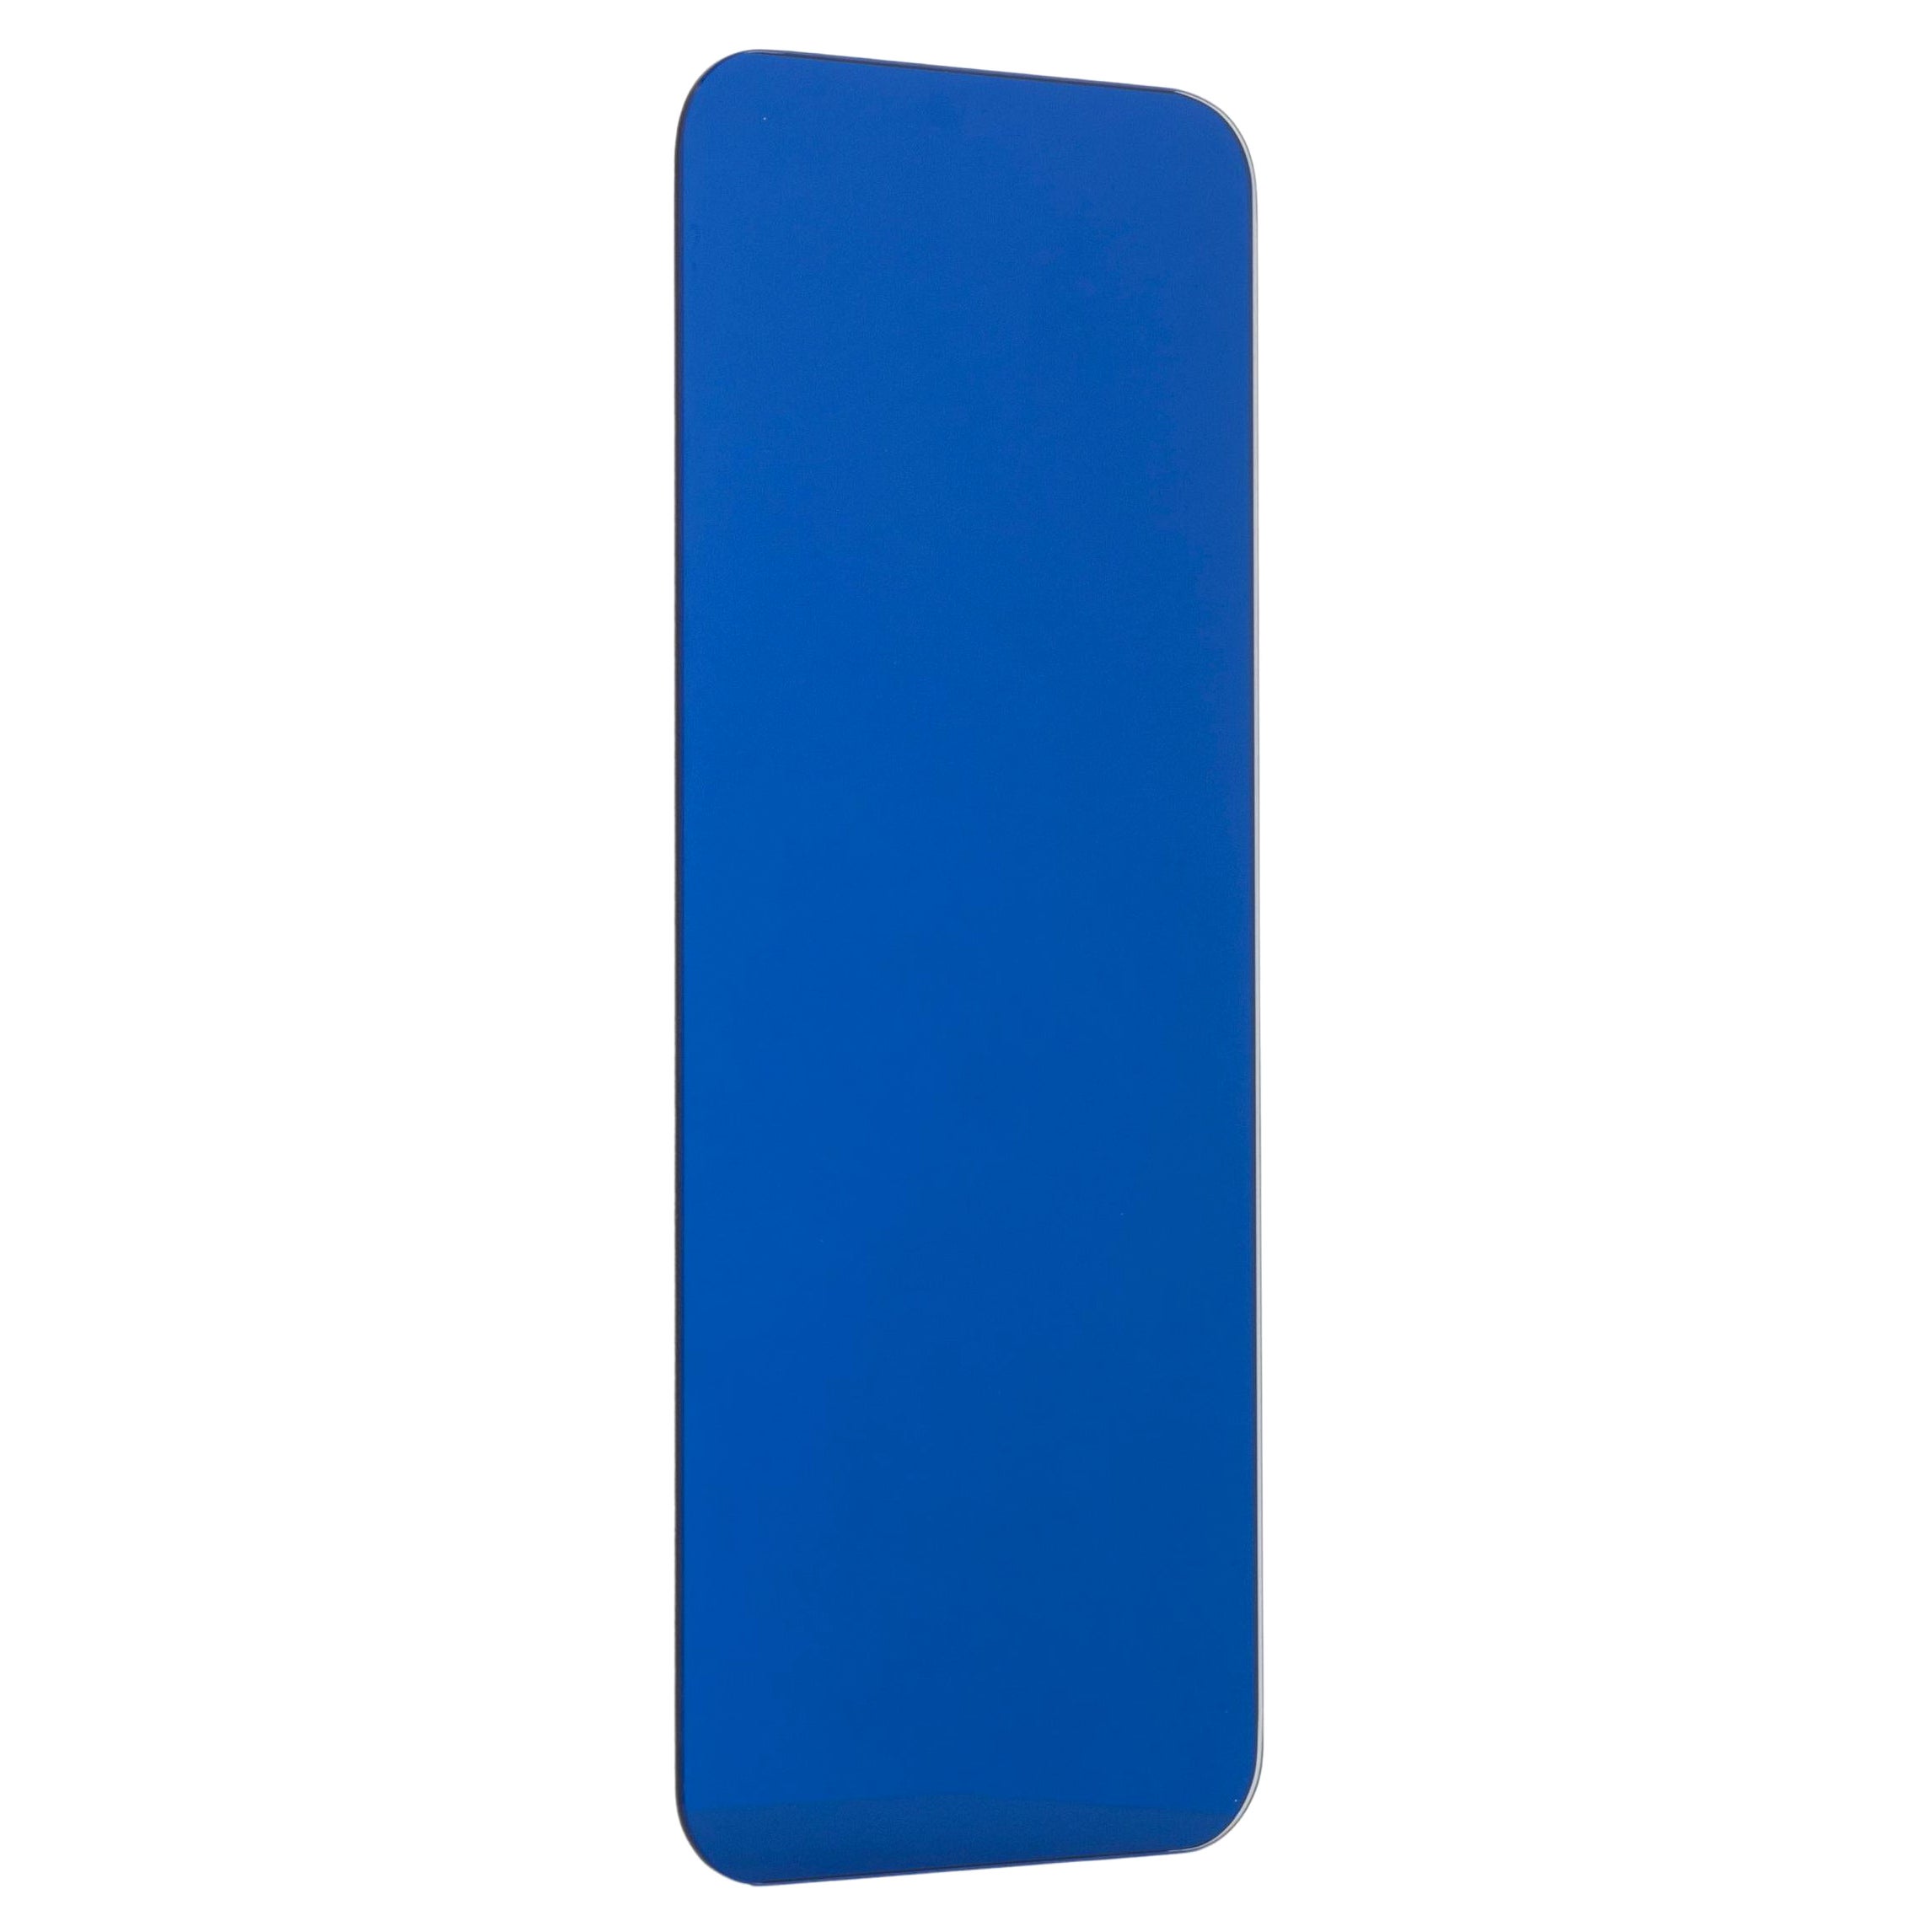 Quadris Blue Rectangular Frameless Minimalist Mirror, Large